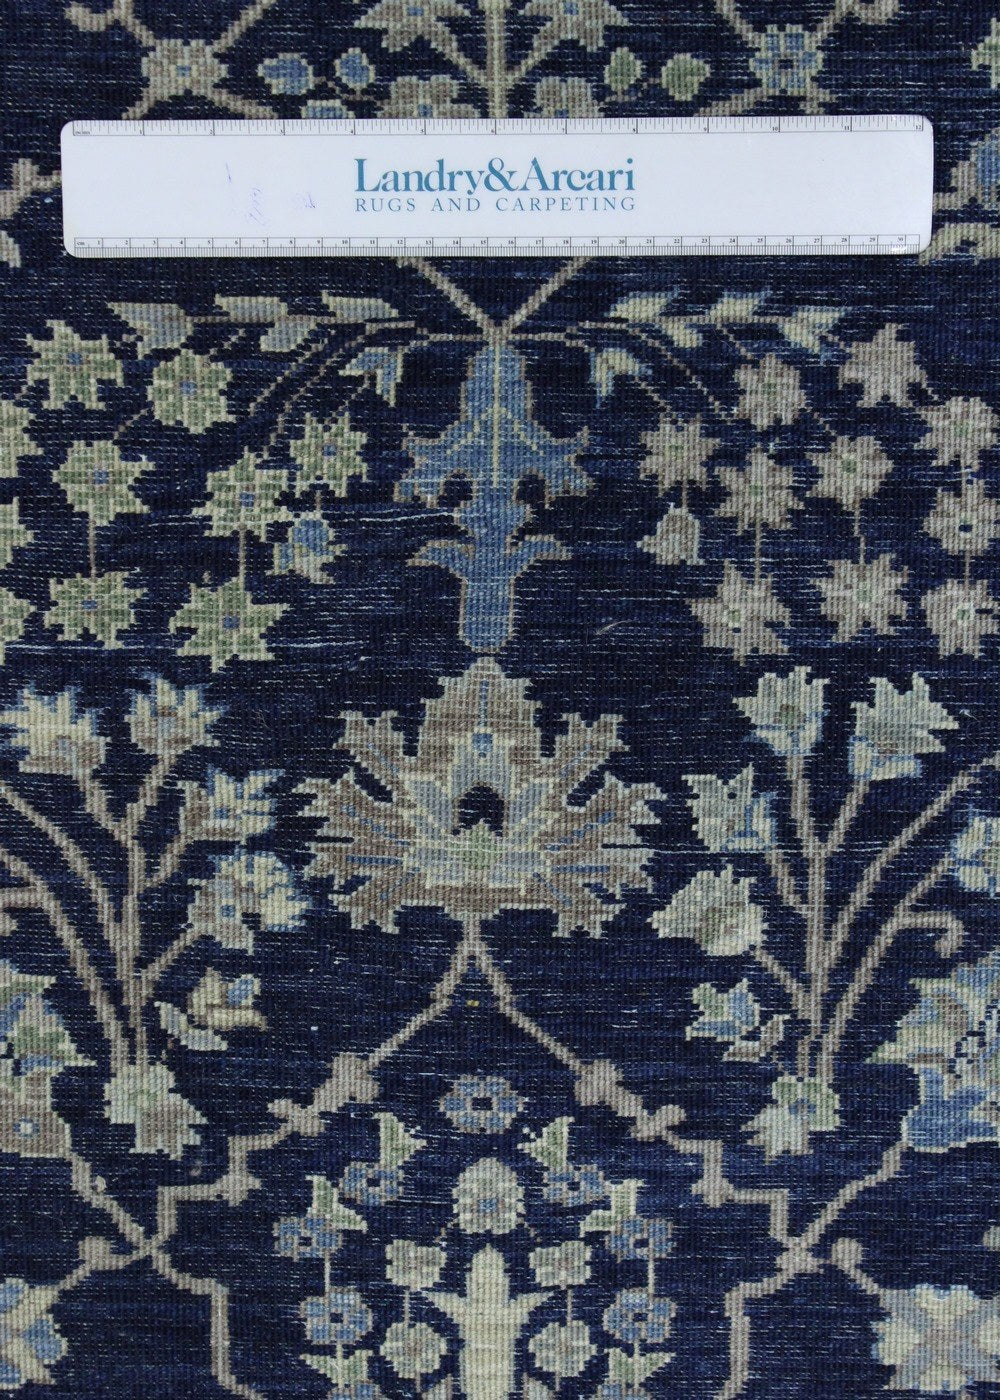 Ferahan Sarouk Handwoven Traditional Rug, J68765